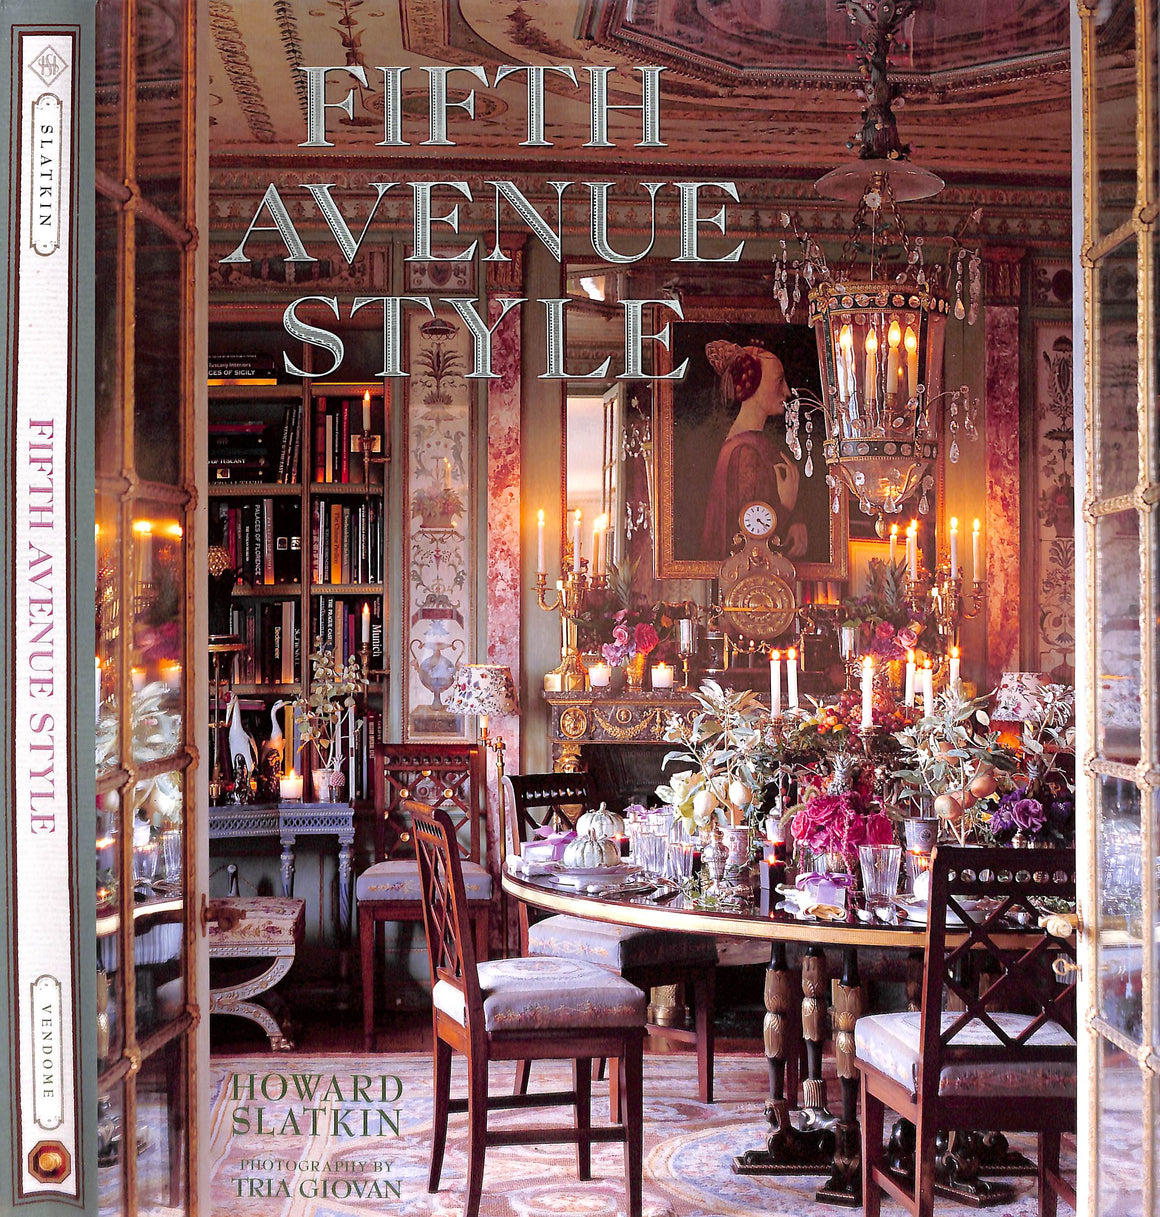 "Fifth Avenue Style: A Designer's New York Apartment" 2013 SLATKIN, Howard (SOLD)